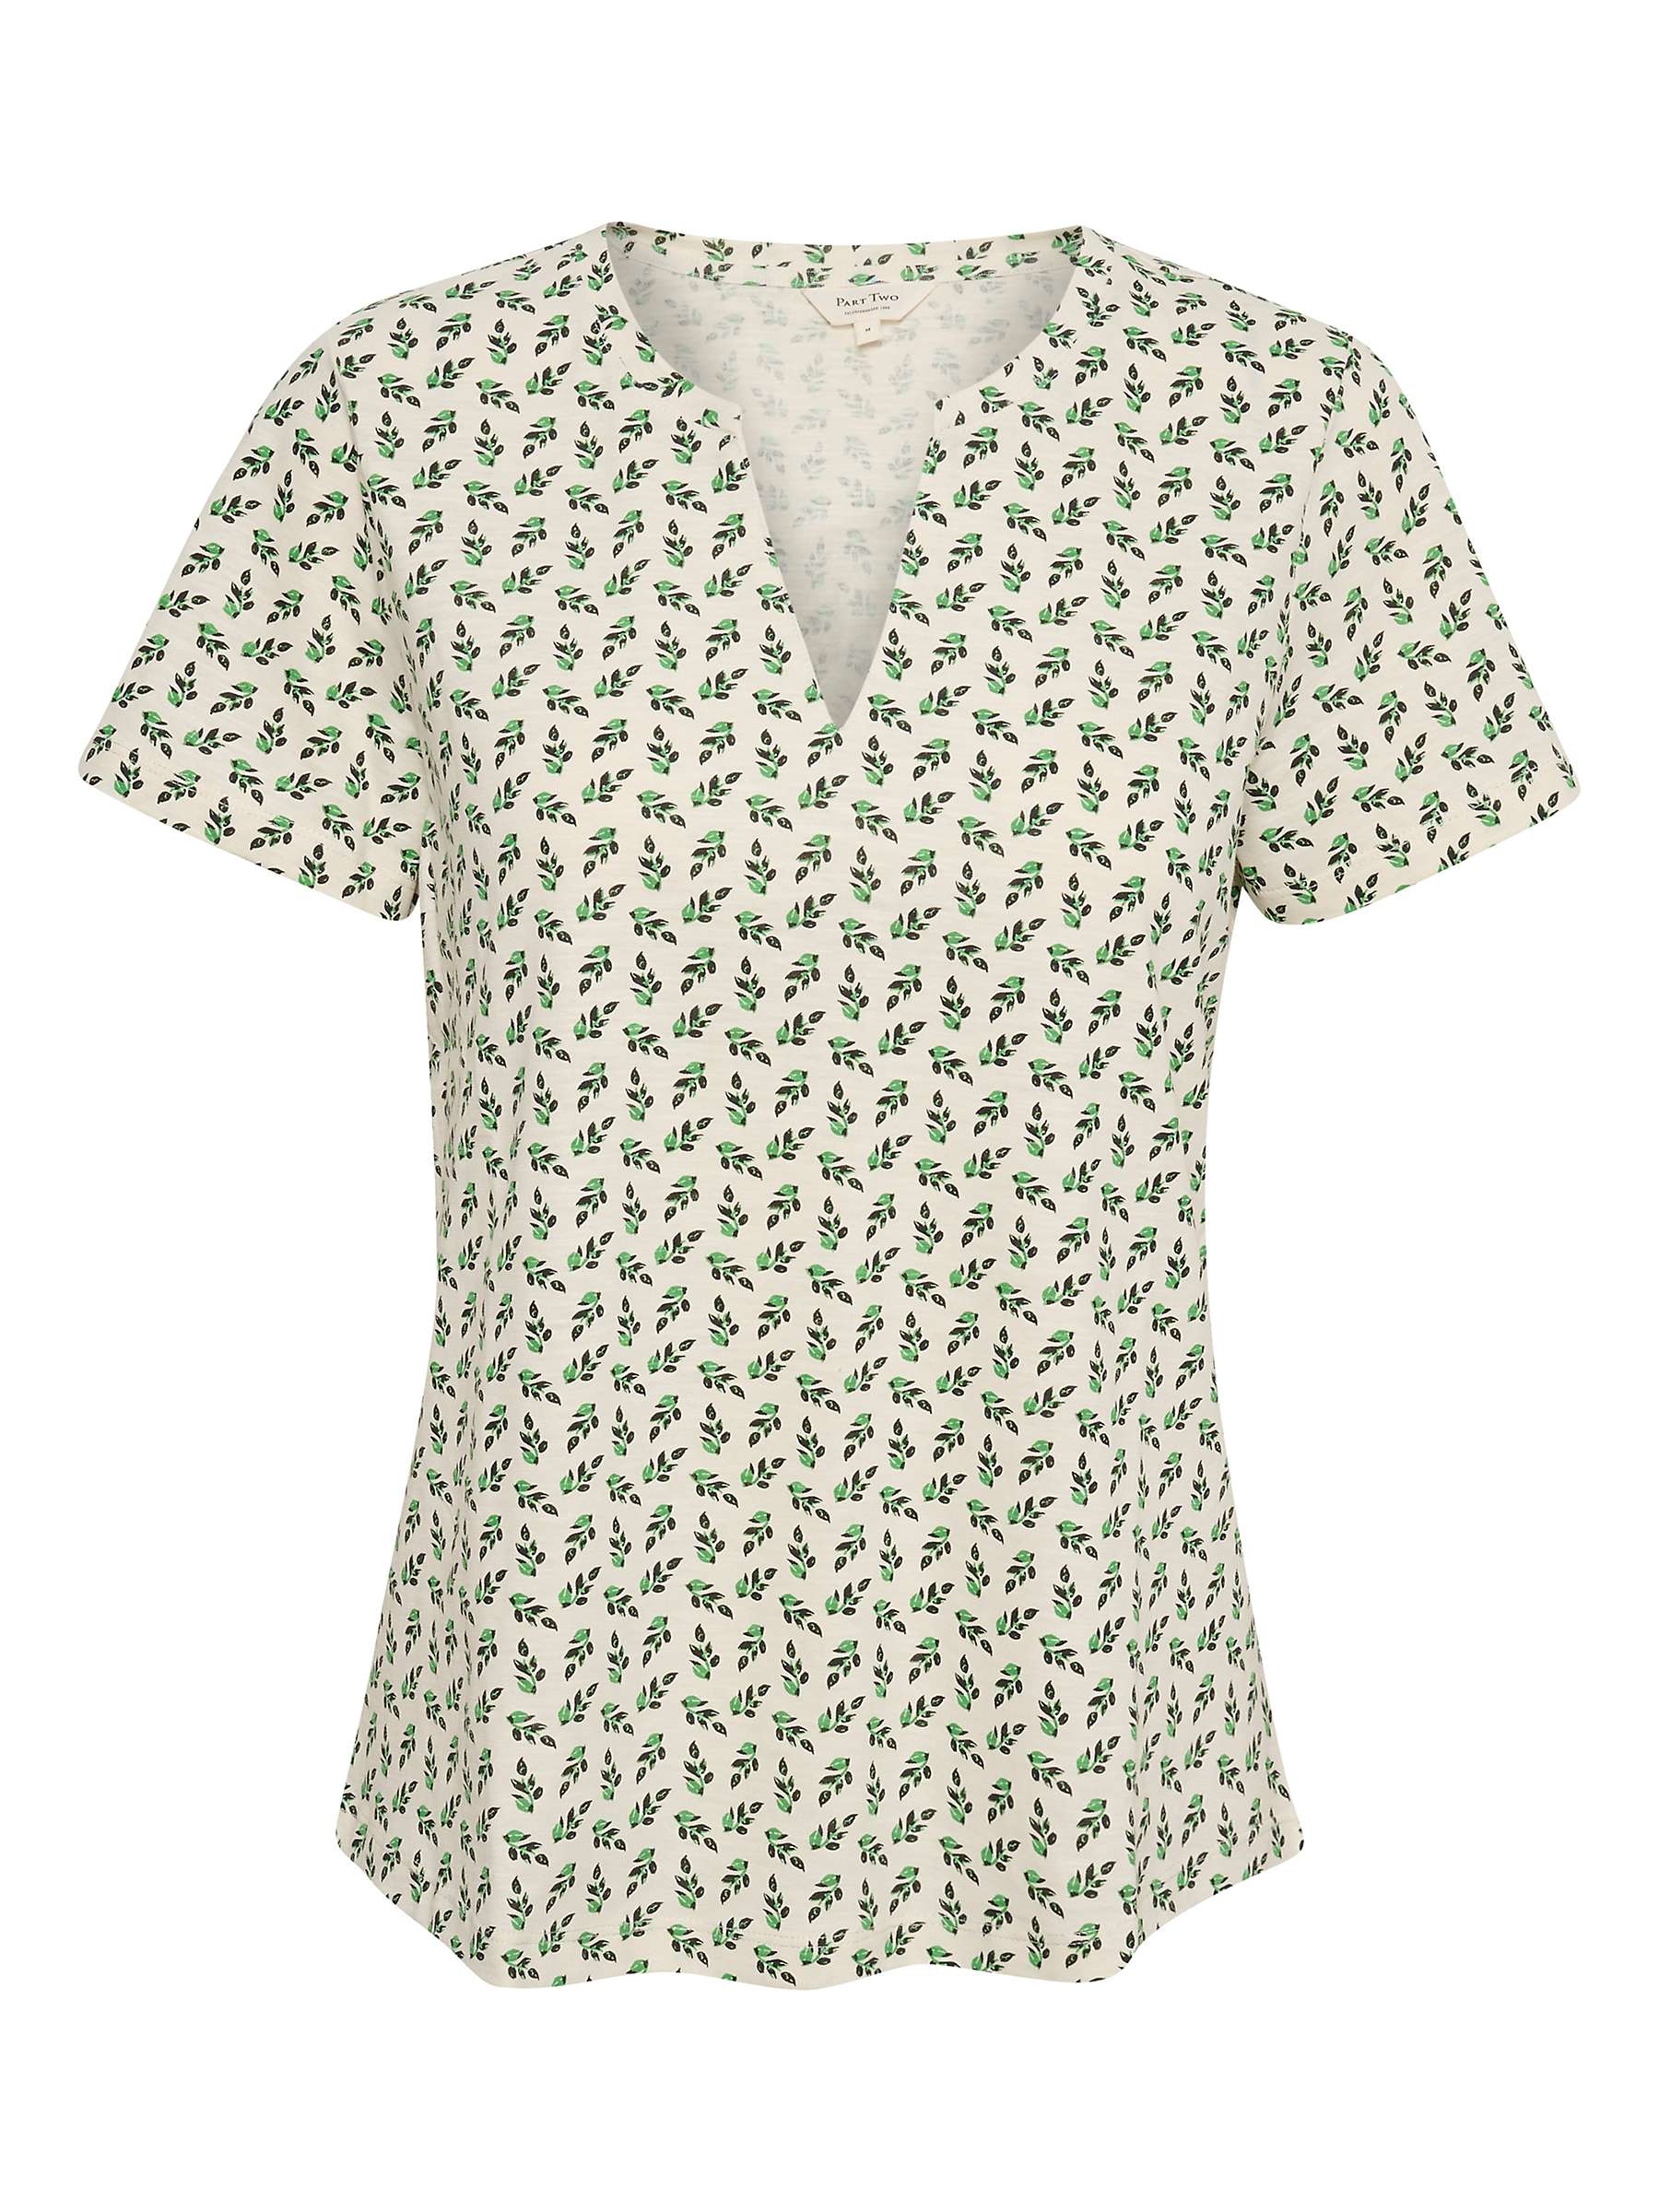 Buy Part Two Gesina Short Sleeve Cotton Top, Greenbriar Leaf Online at johnlewis.com